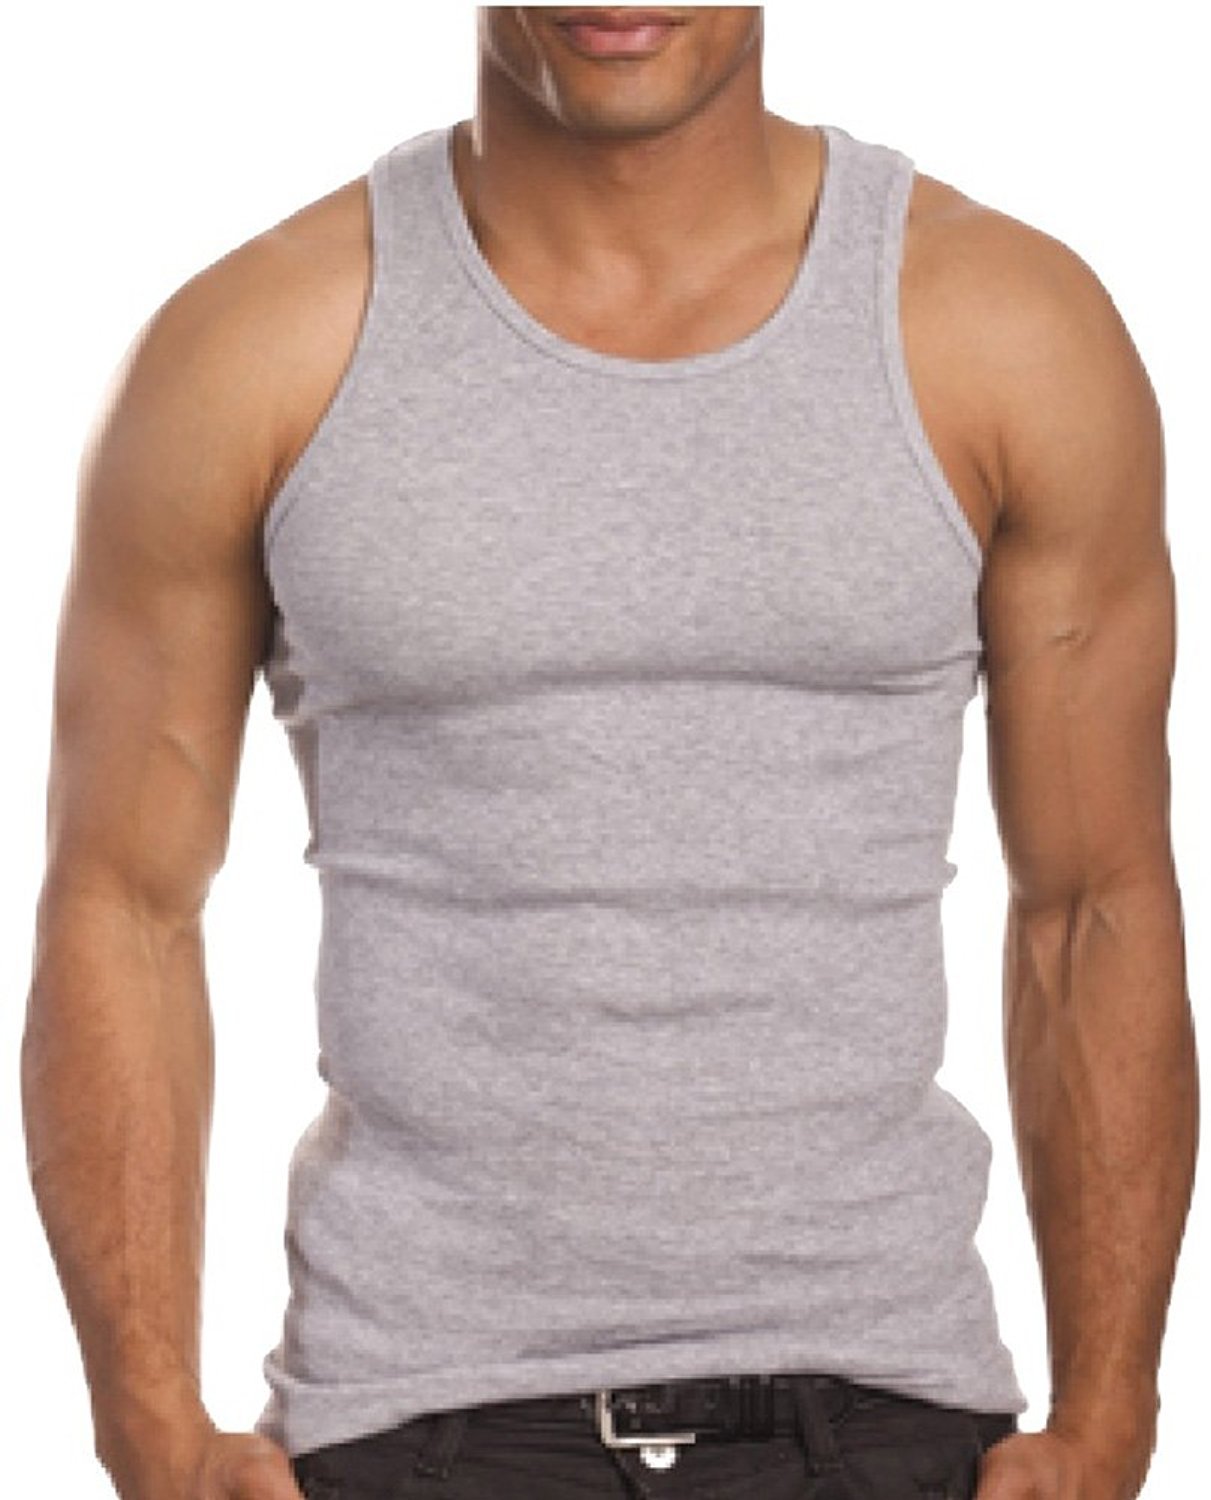 ToBeInStyle Men/’s Workout A-Shirt Long Muscle Shirt Tank Top